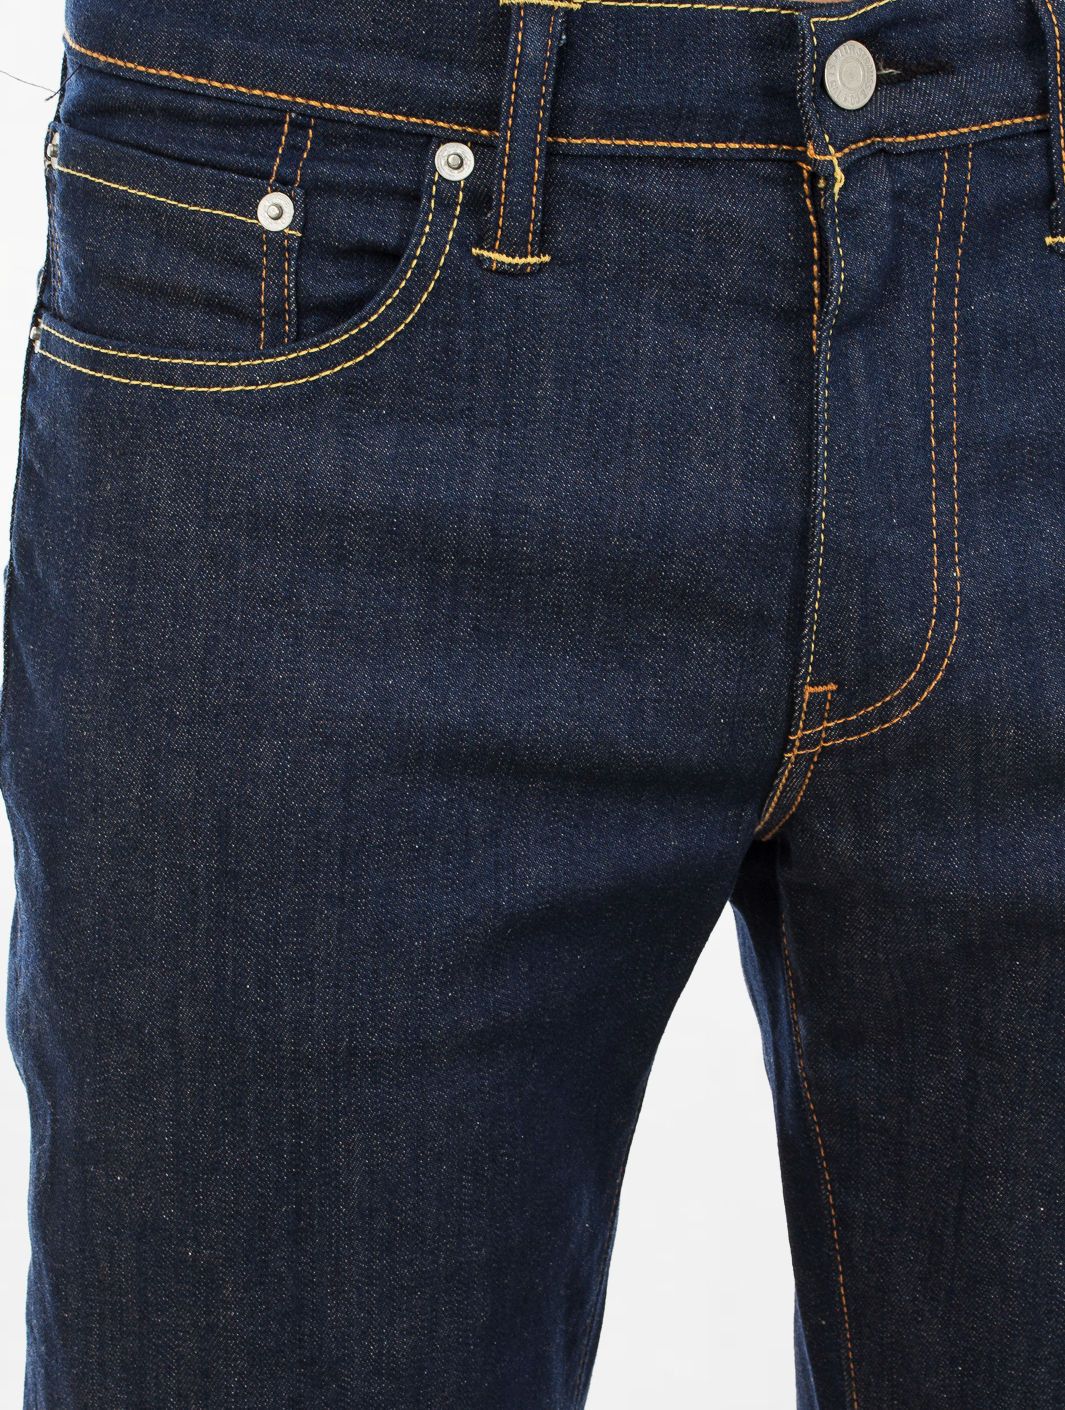 Levi's 511 Jeans Size US 29 - 6 Preview